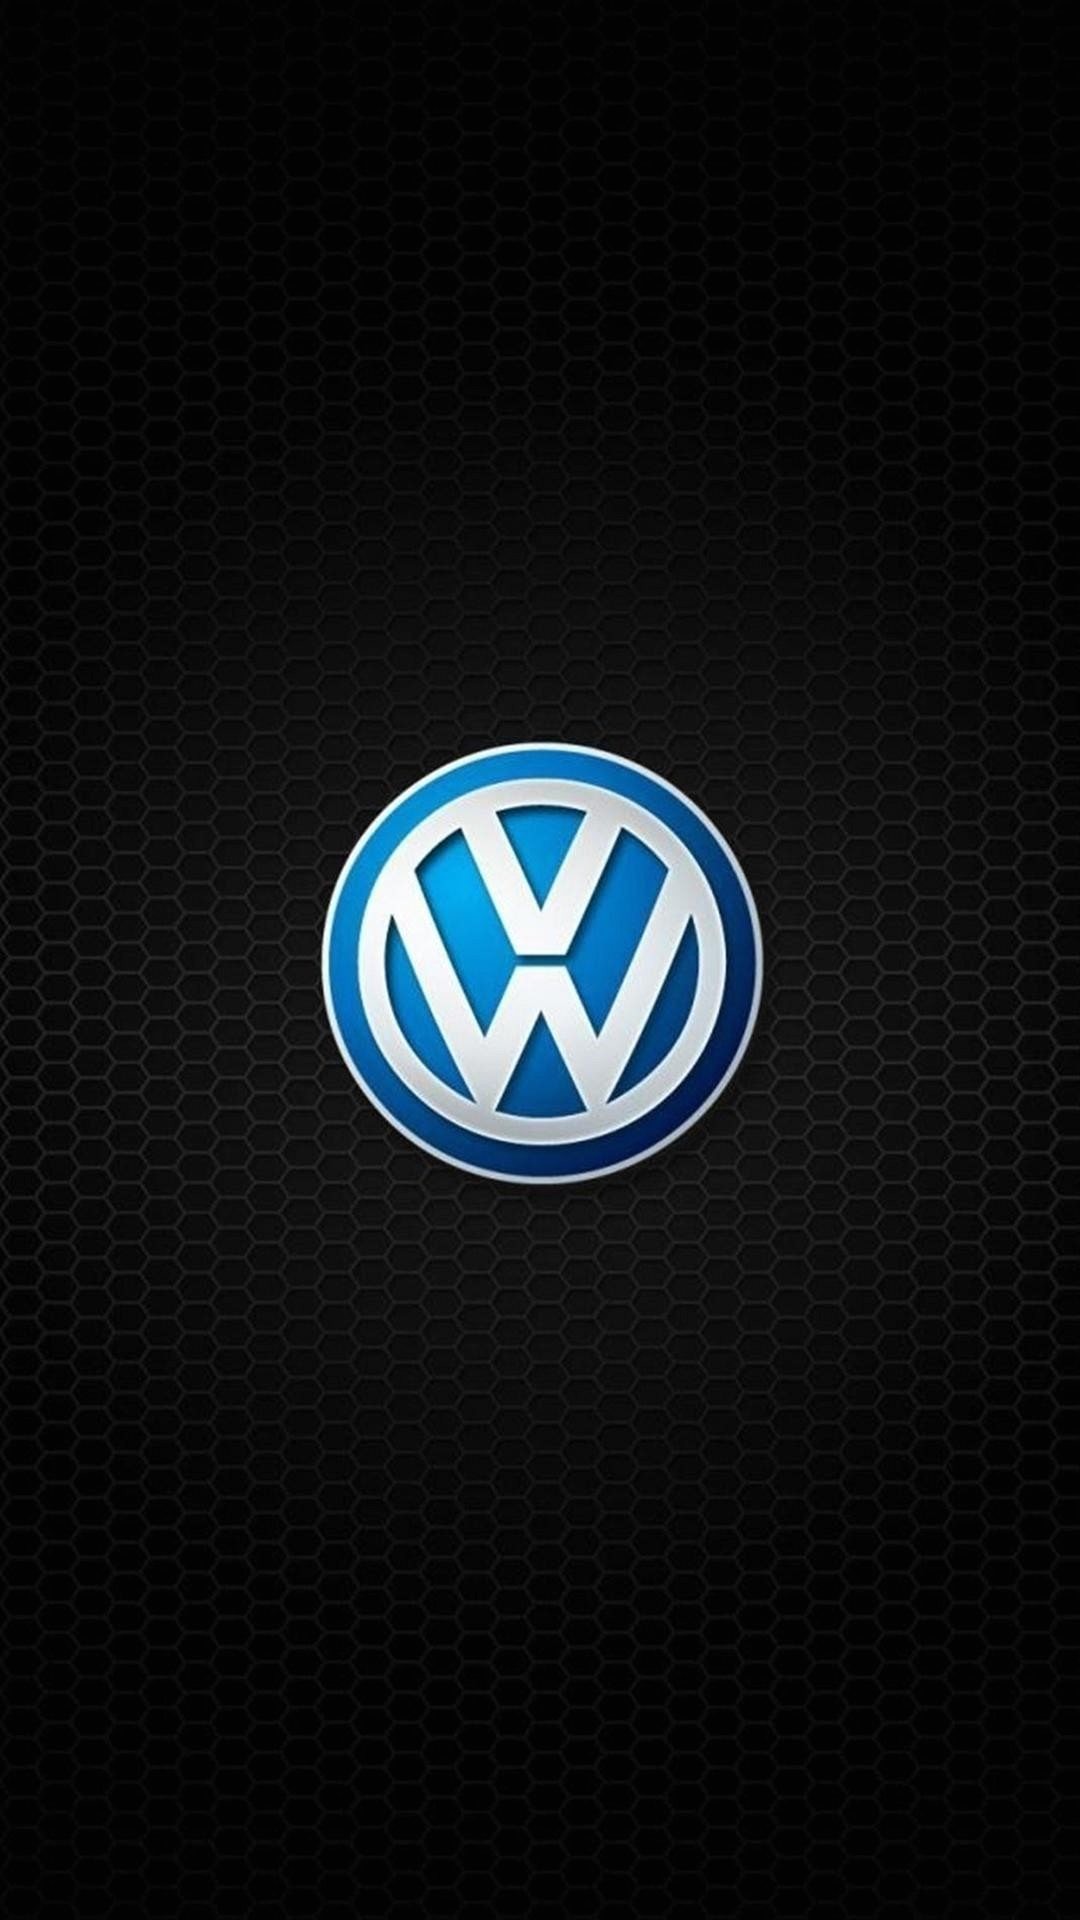 1080x1920 Wallpaper full hd 1080 x 1920 smartphone volkswagen logo symbol